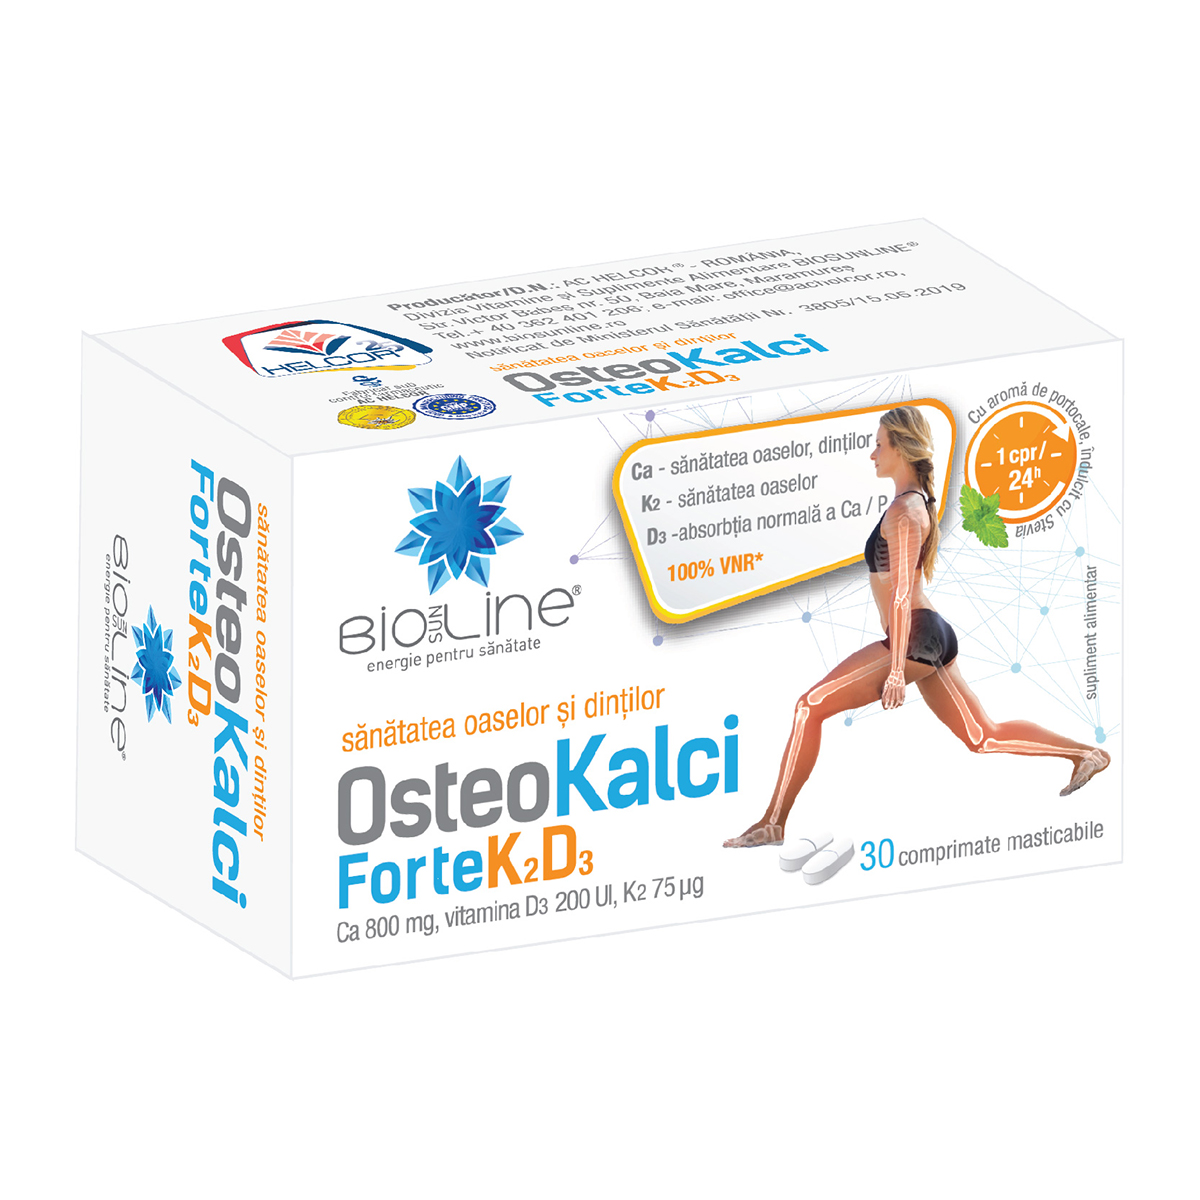 Osteo Kalci Forte K2D3, 30 comprimate masticabile, BioSunLine